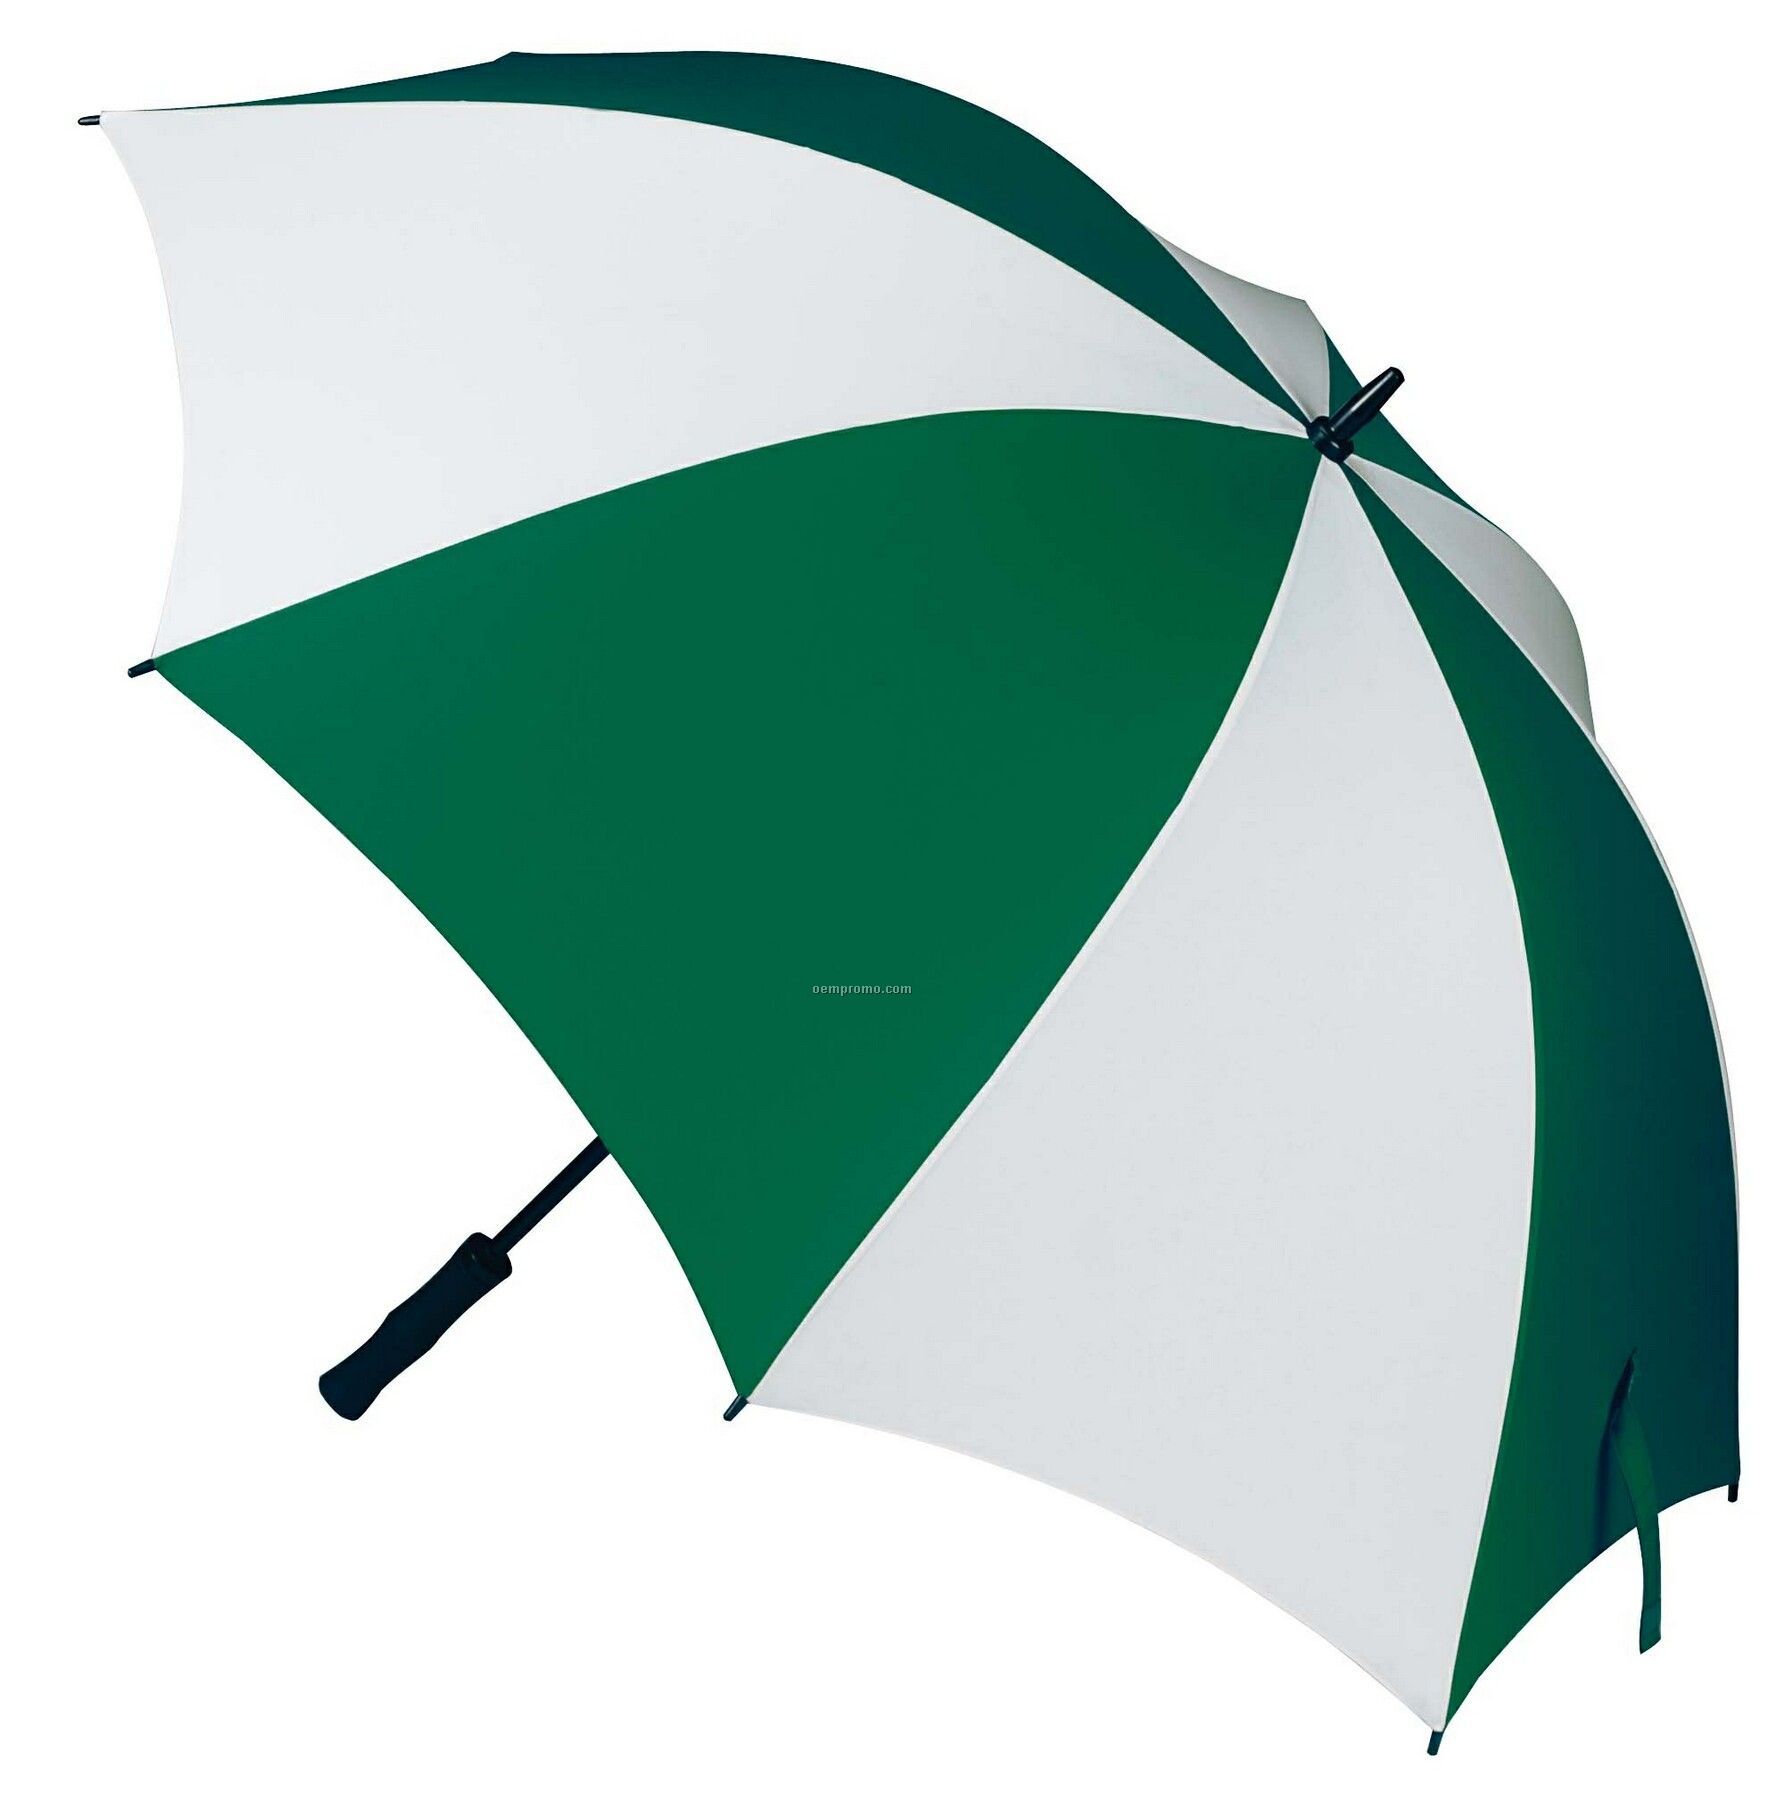 Tee Off Large Manual 60" Golf Umbrella